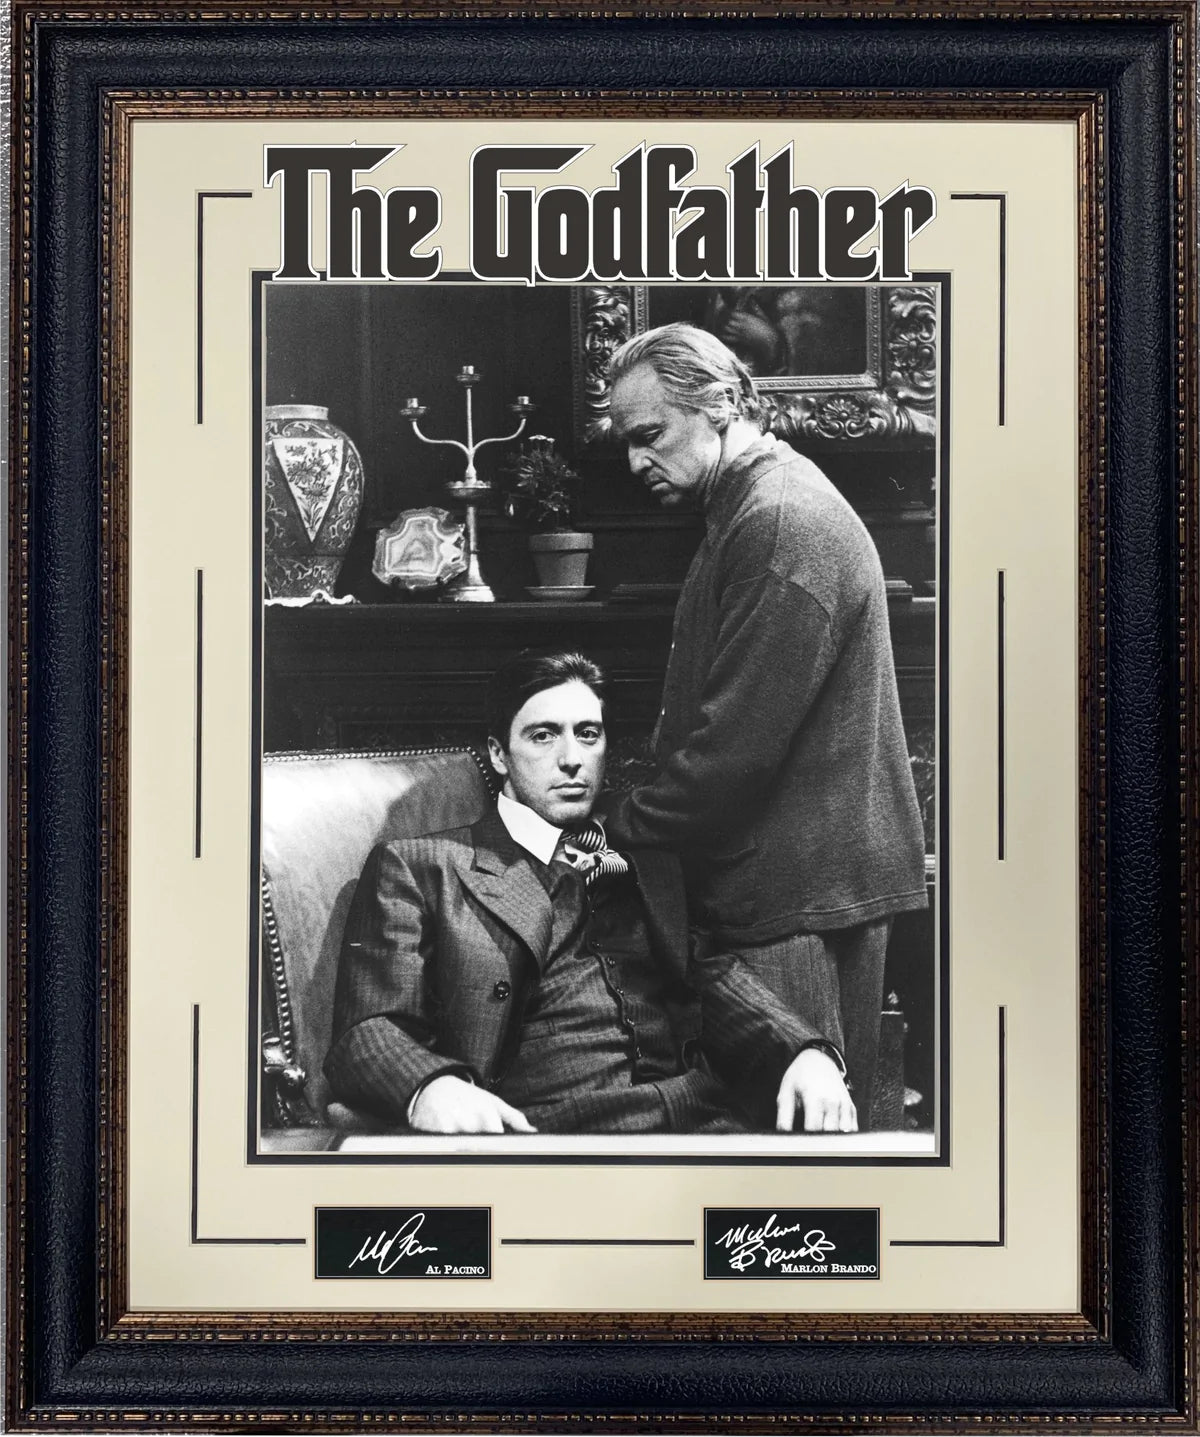 Al Pacino & Marlon Brando "The Godfather" Laser Engraved Signature Framed Artwork - Latitude Sports Marketing